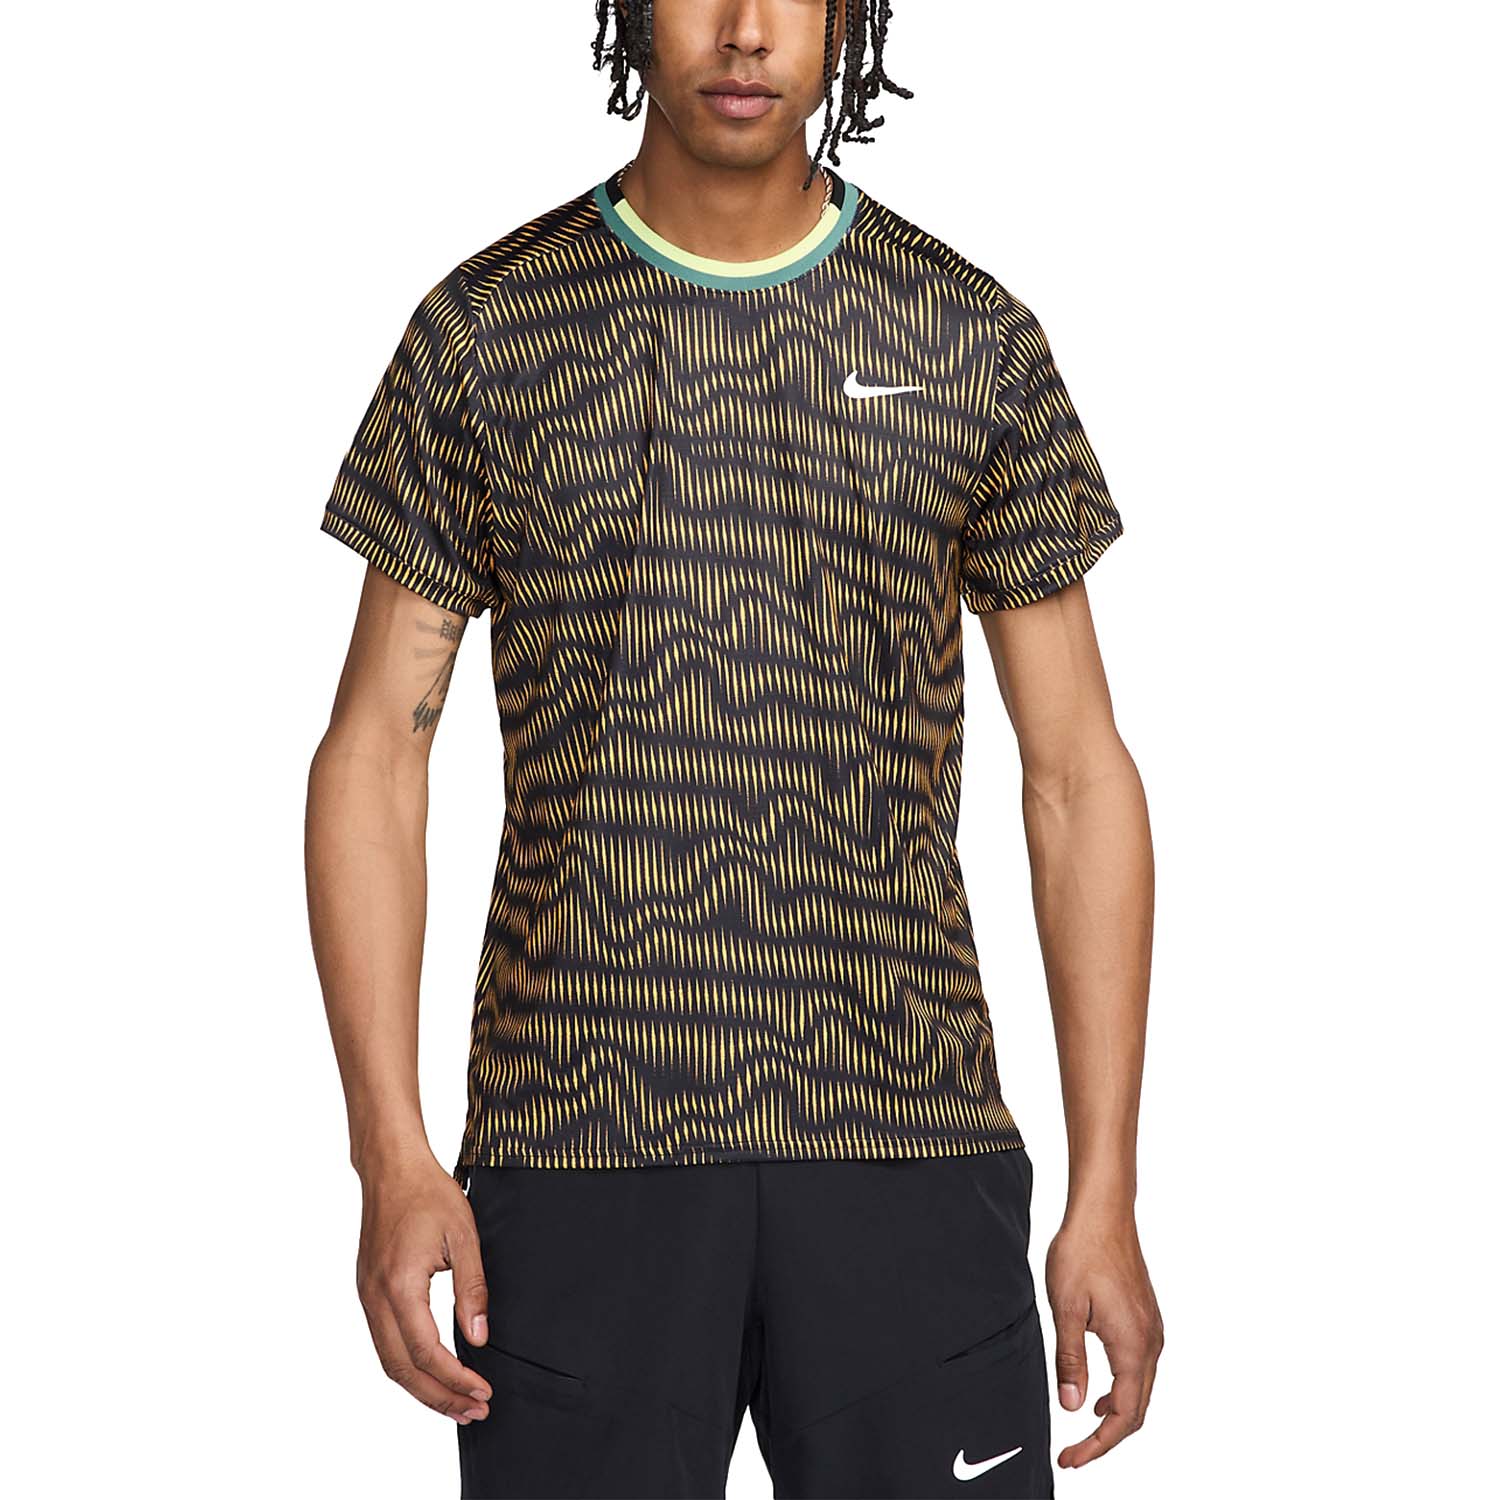 Nike Dri-FIT Advantage T-Shirt - Black/Bicoastal/White